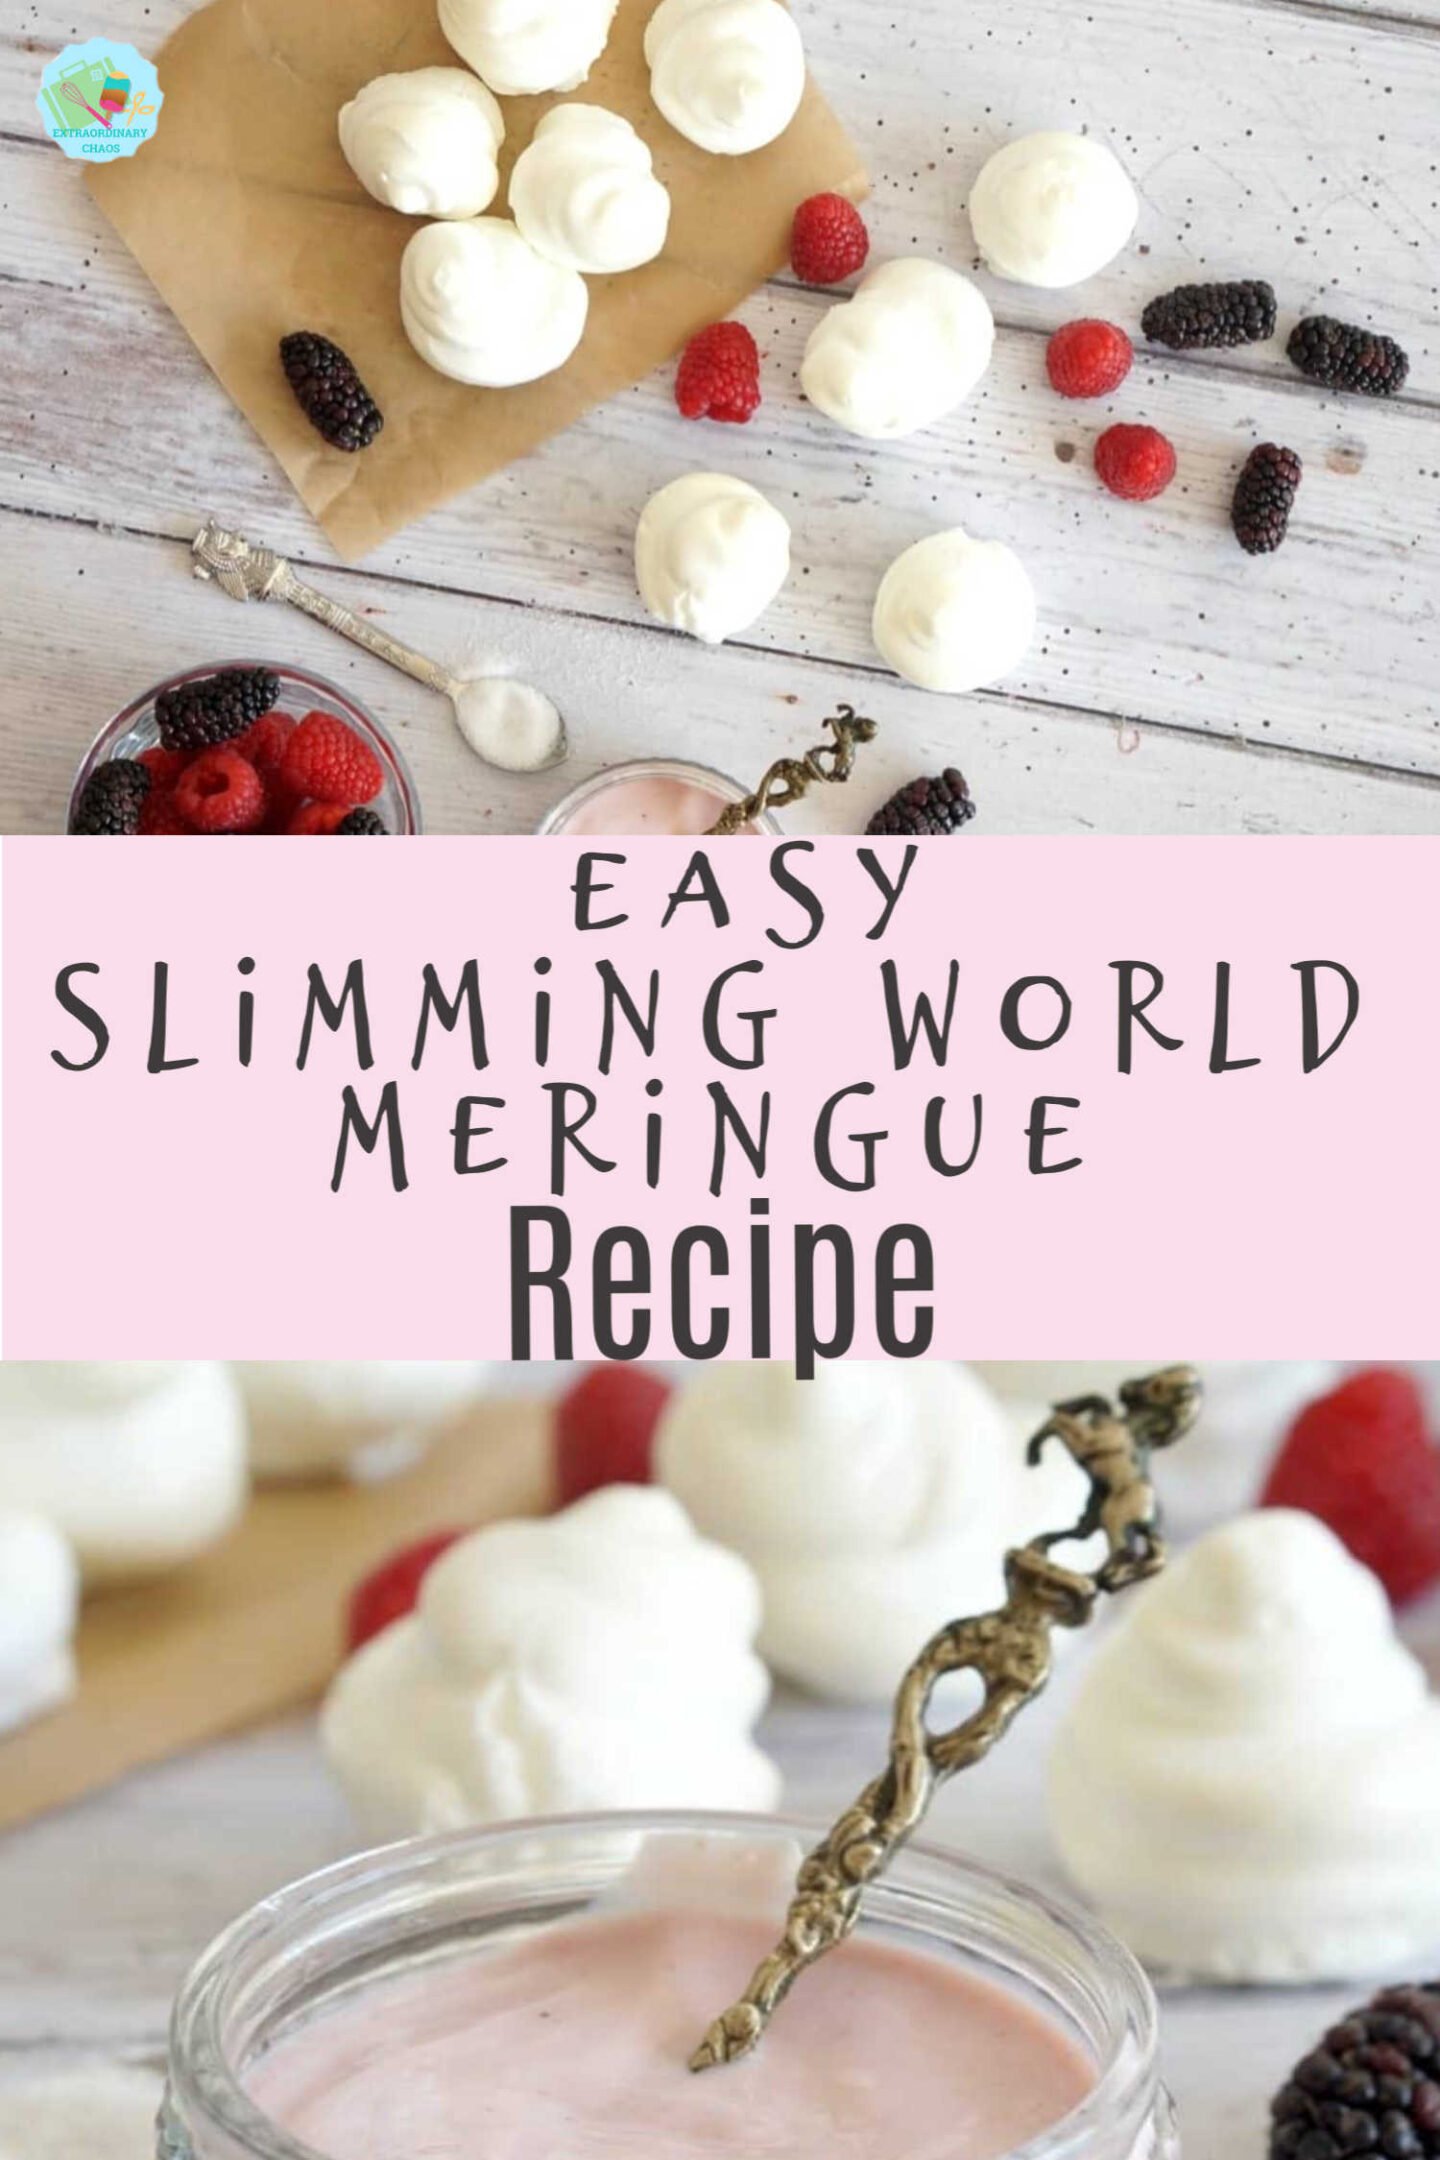 Easy slimming world meringue recipe to get perfect low syn Meringues